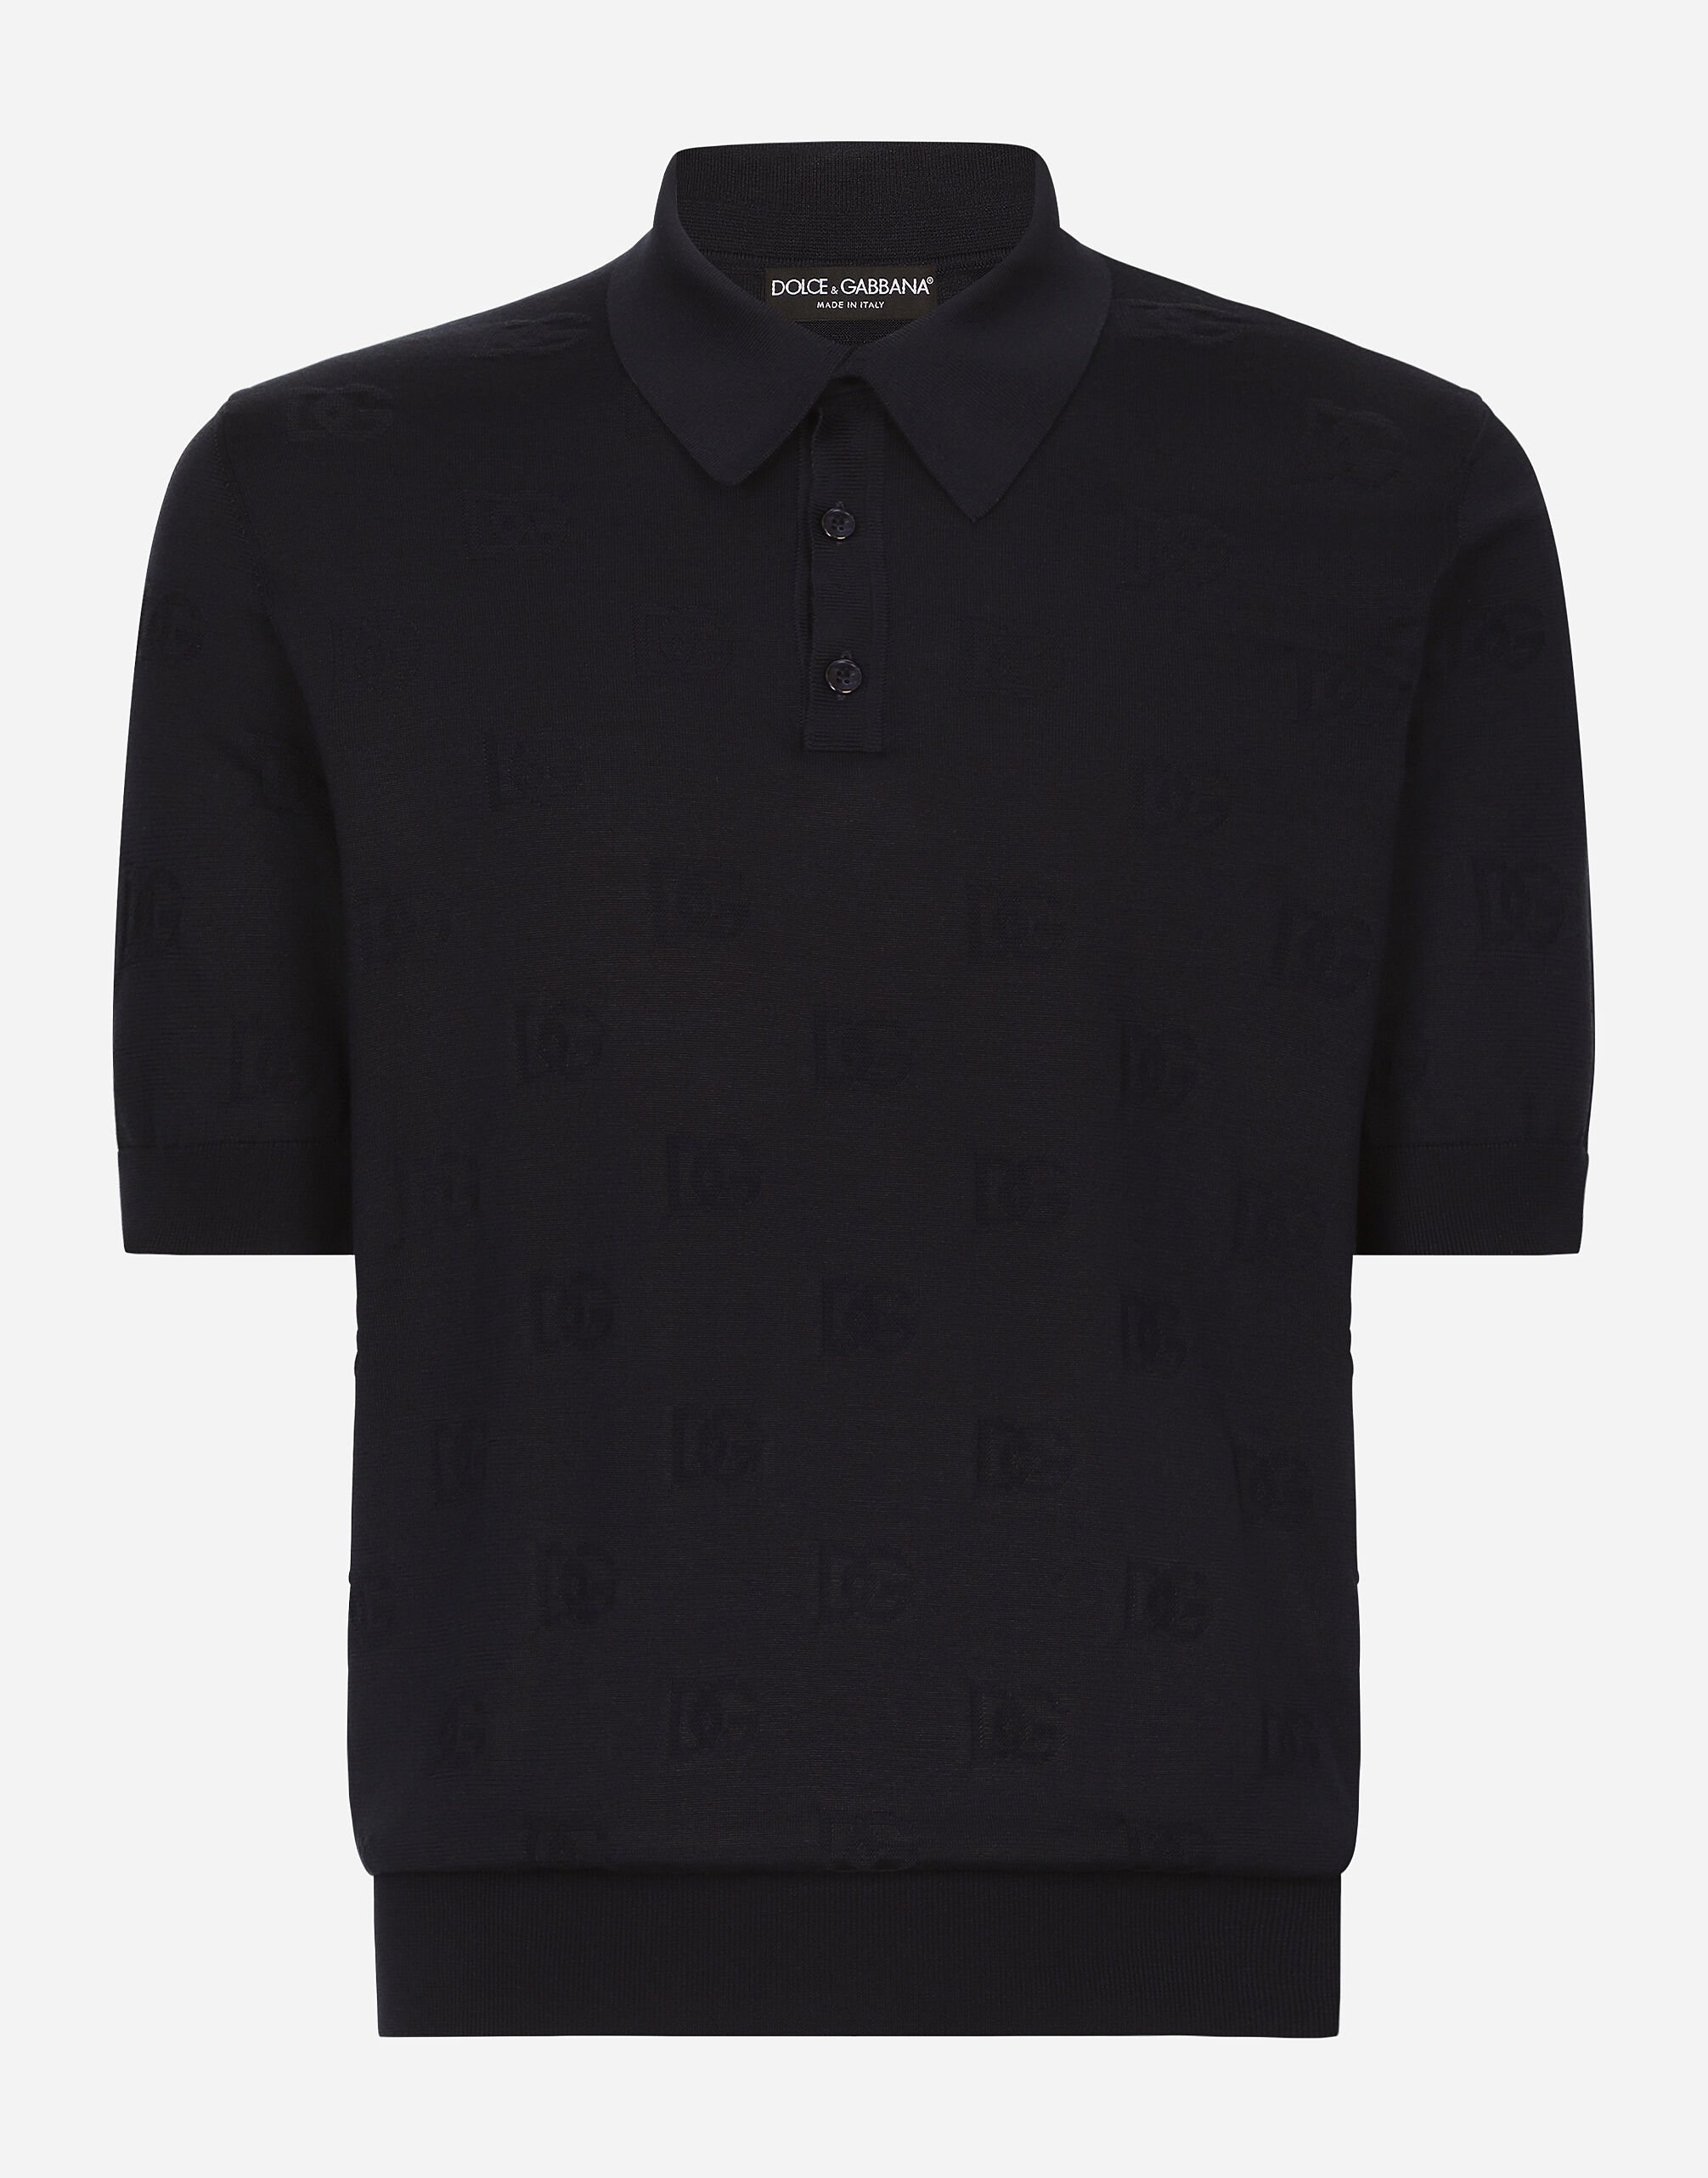 Dolce & Gabbana Silk polo-shirt with all-over DG logo embroidery Black G2RR6TFUBGC